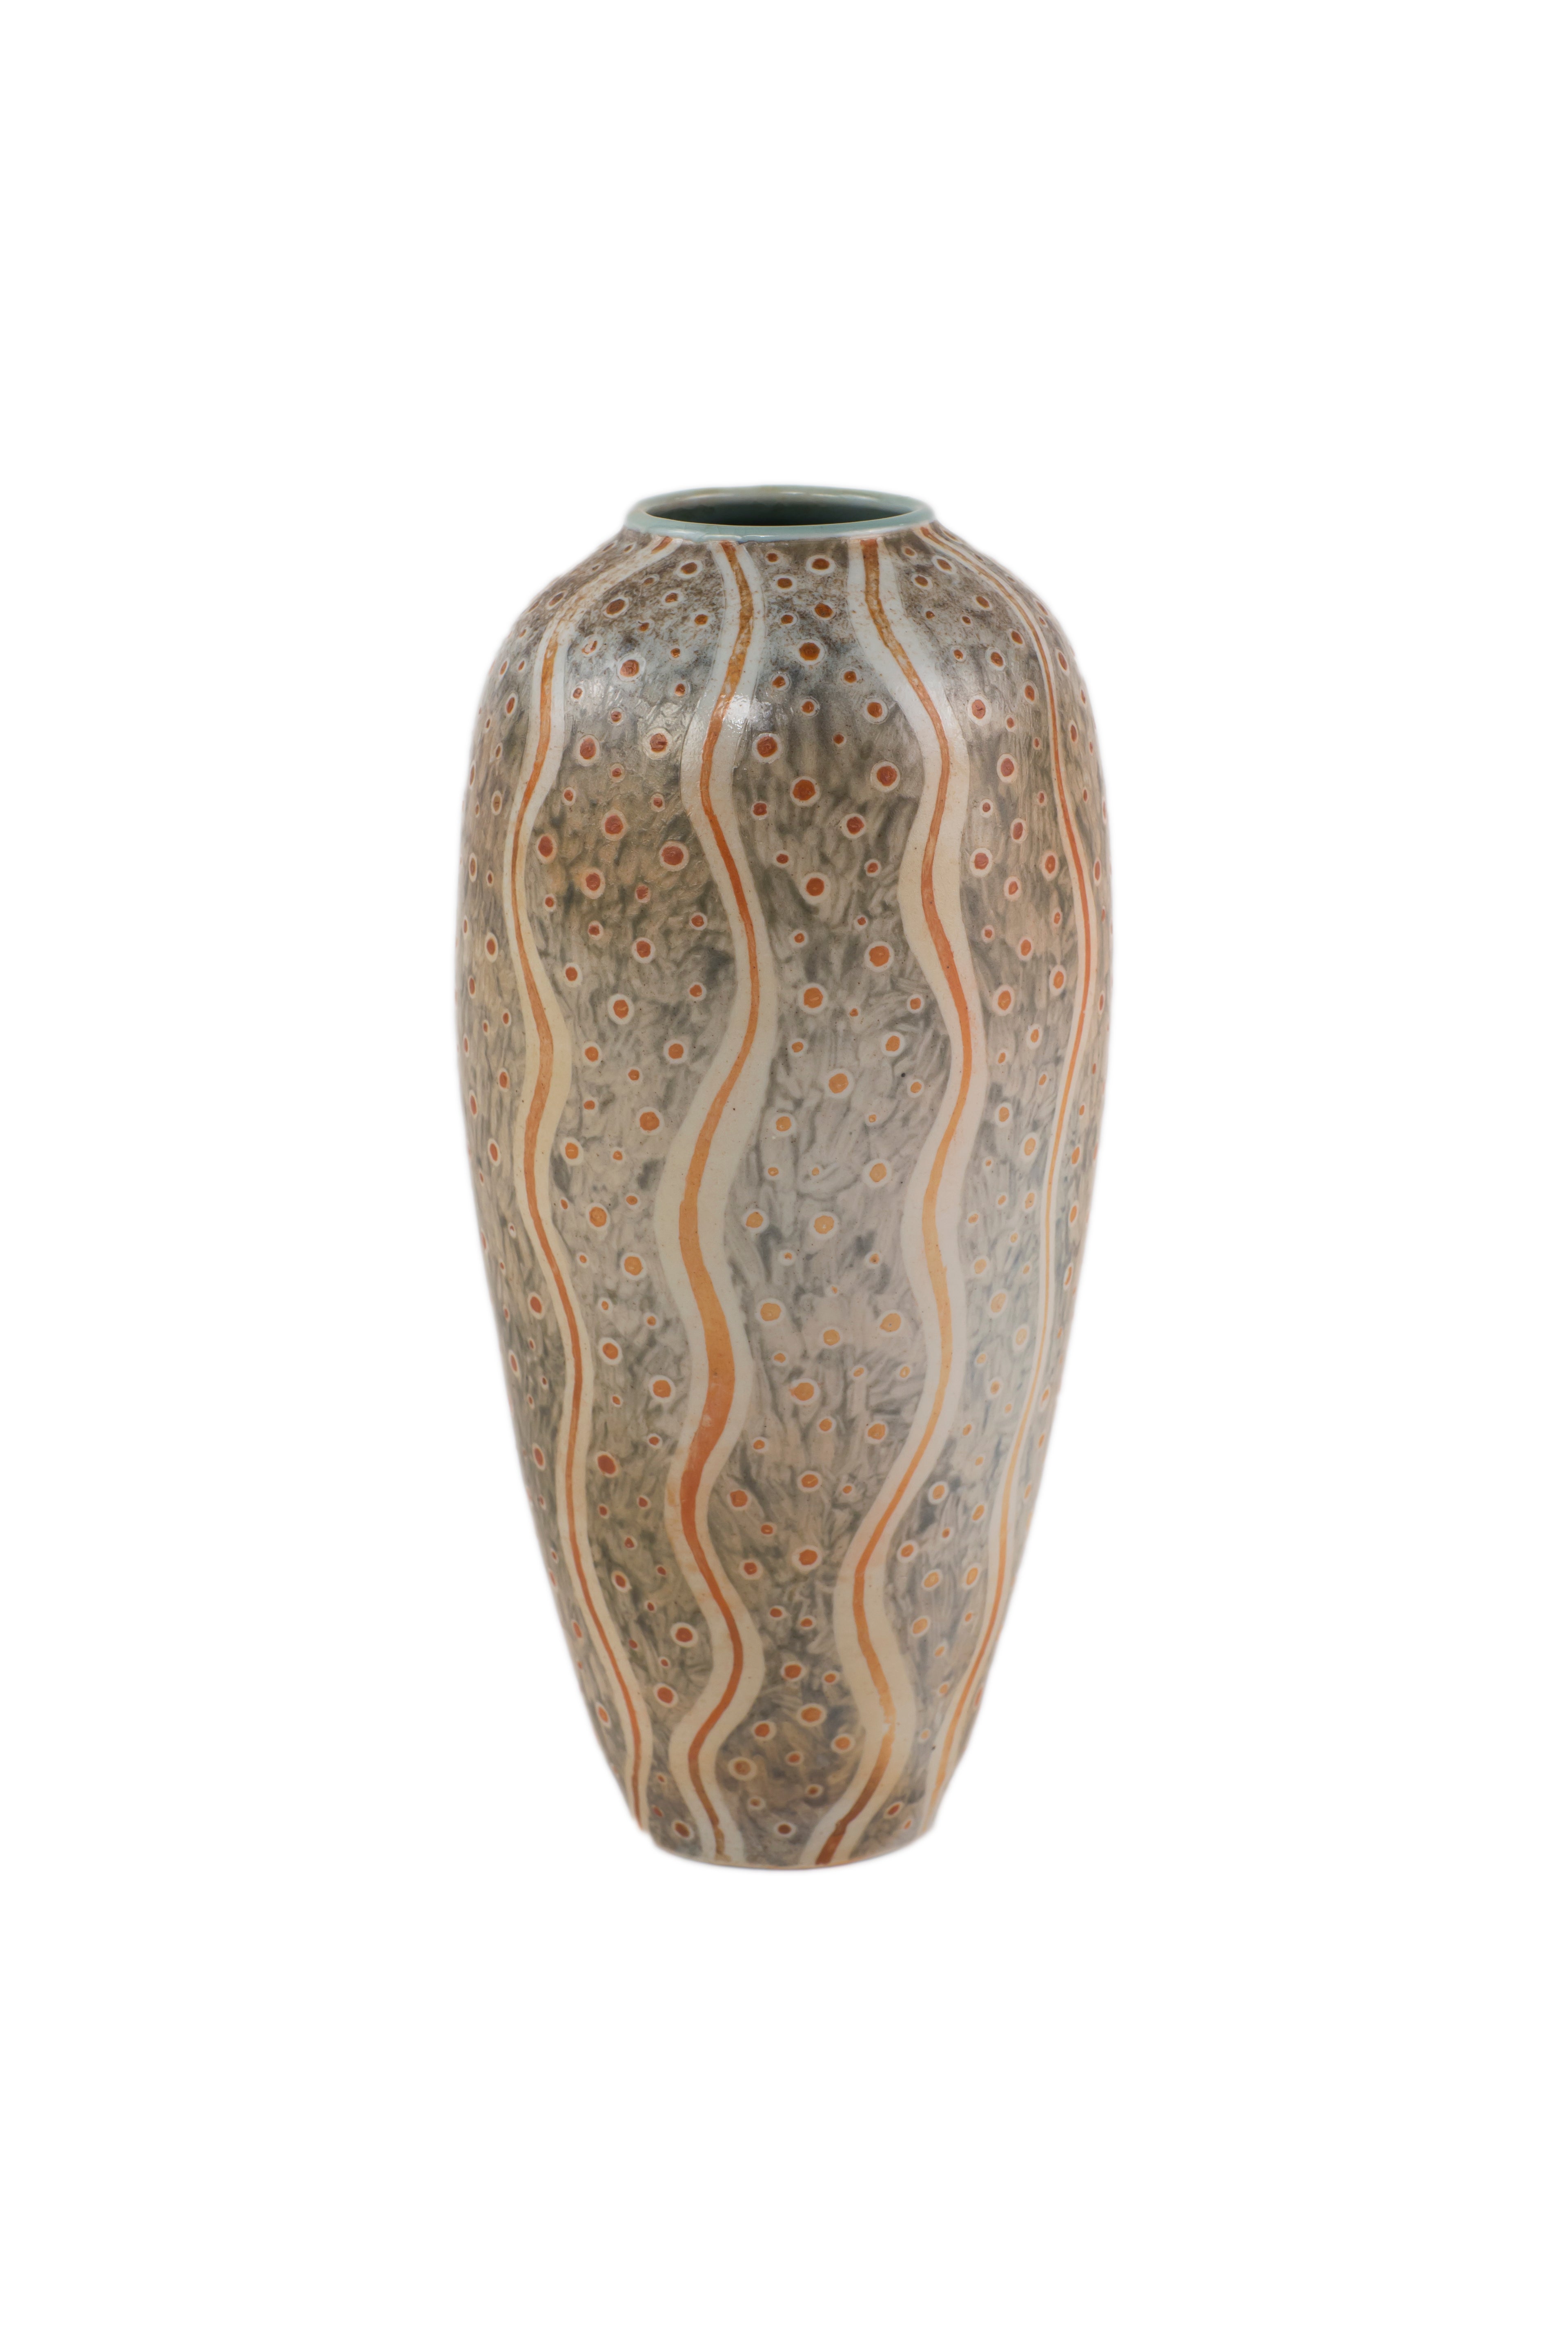 An Art Deco Style Ceramic Decorative Vase by, Douglas Breitbart